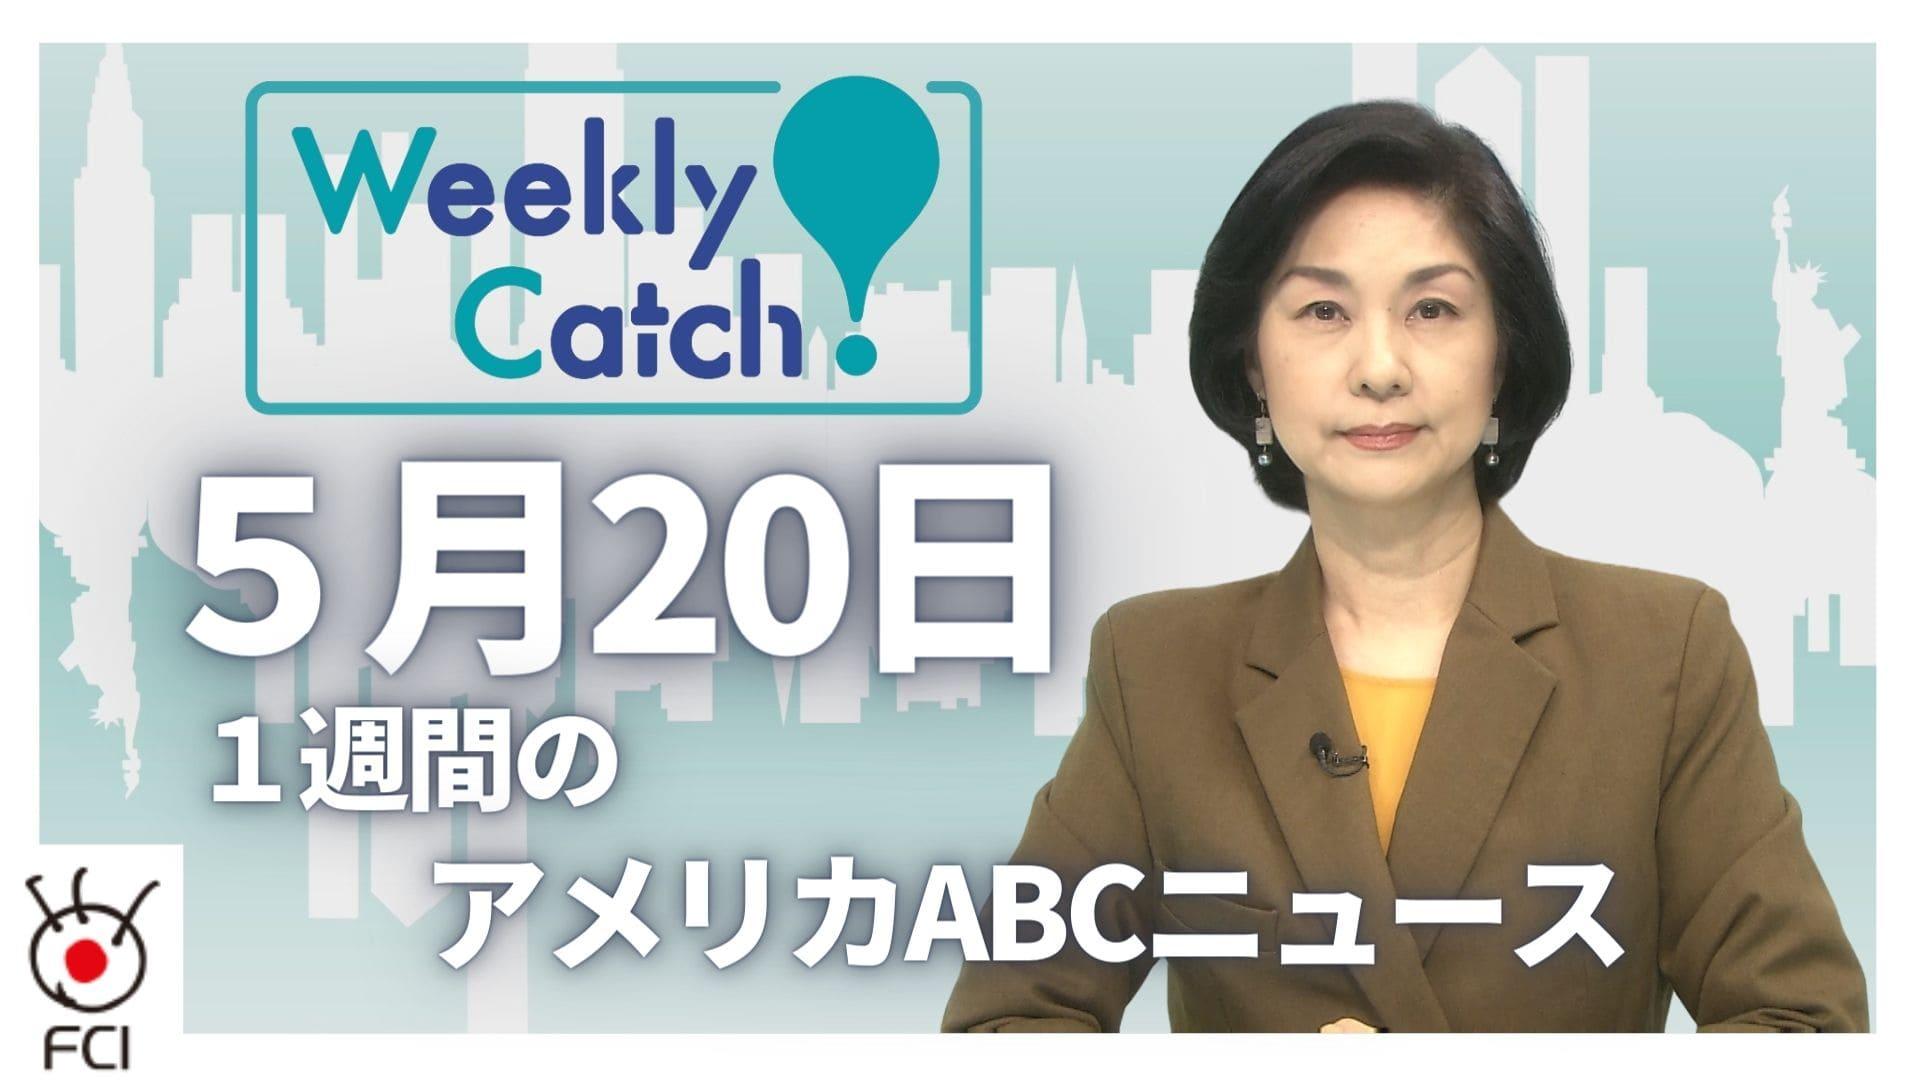 5月20日 Weekly Catch!